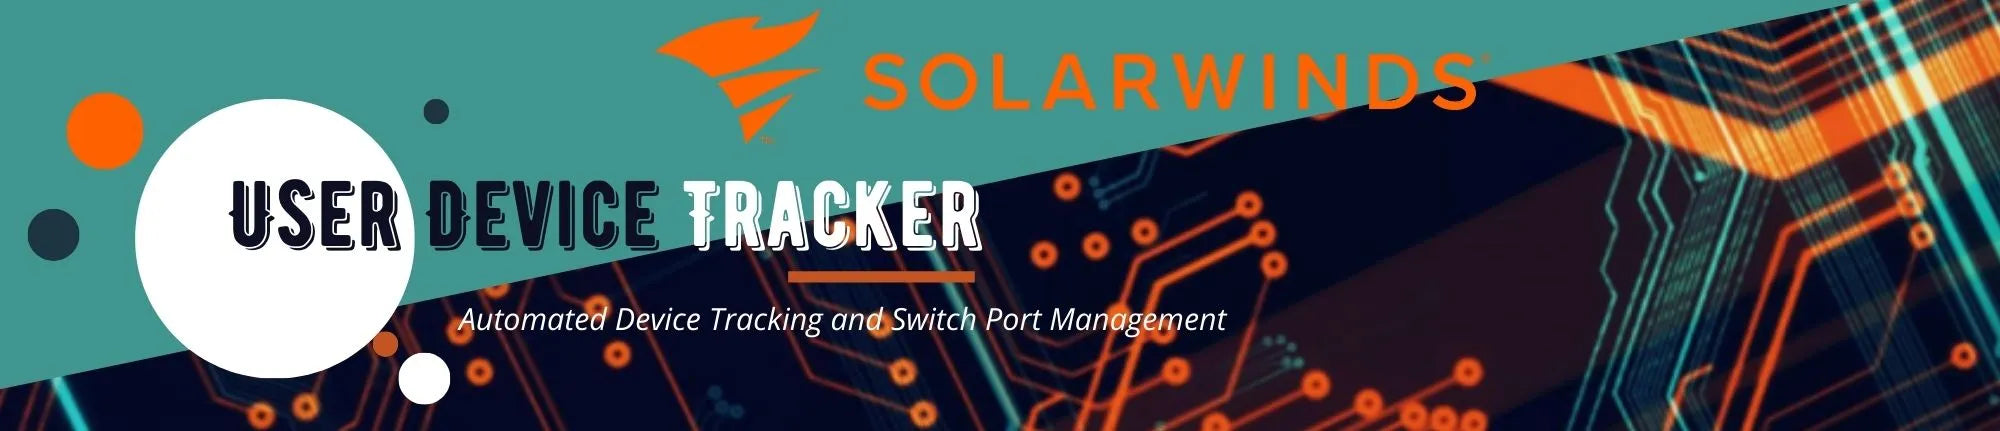 SolarWinds User Device Tracker